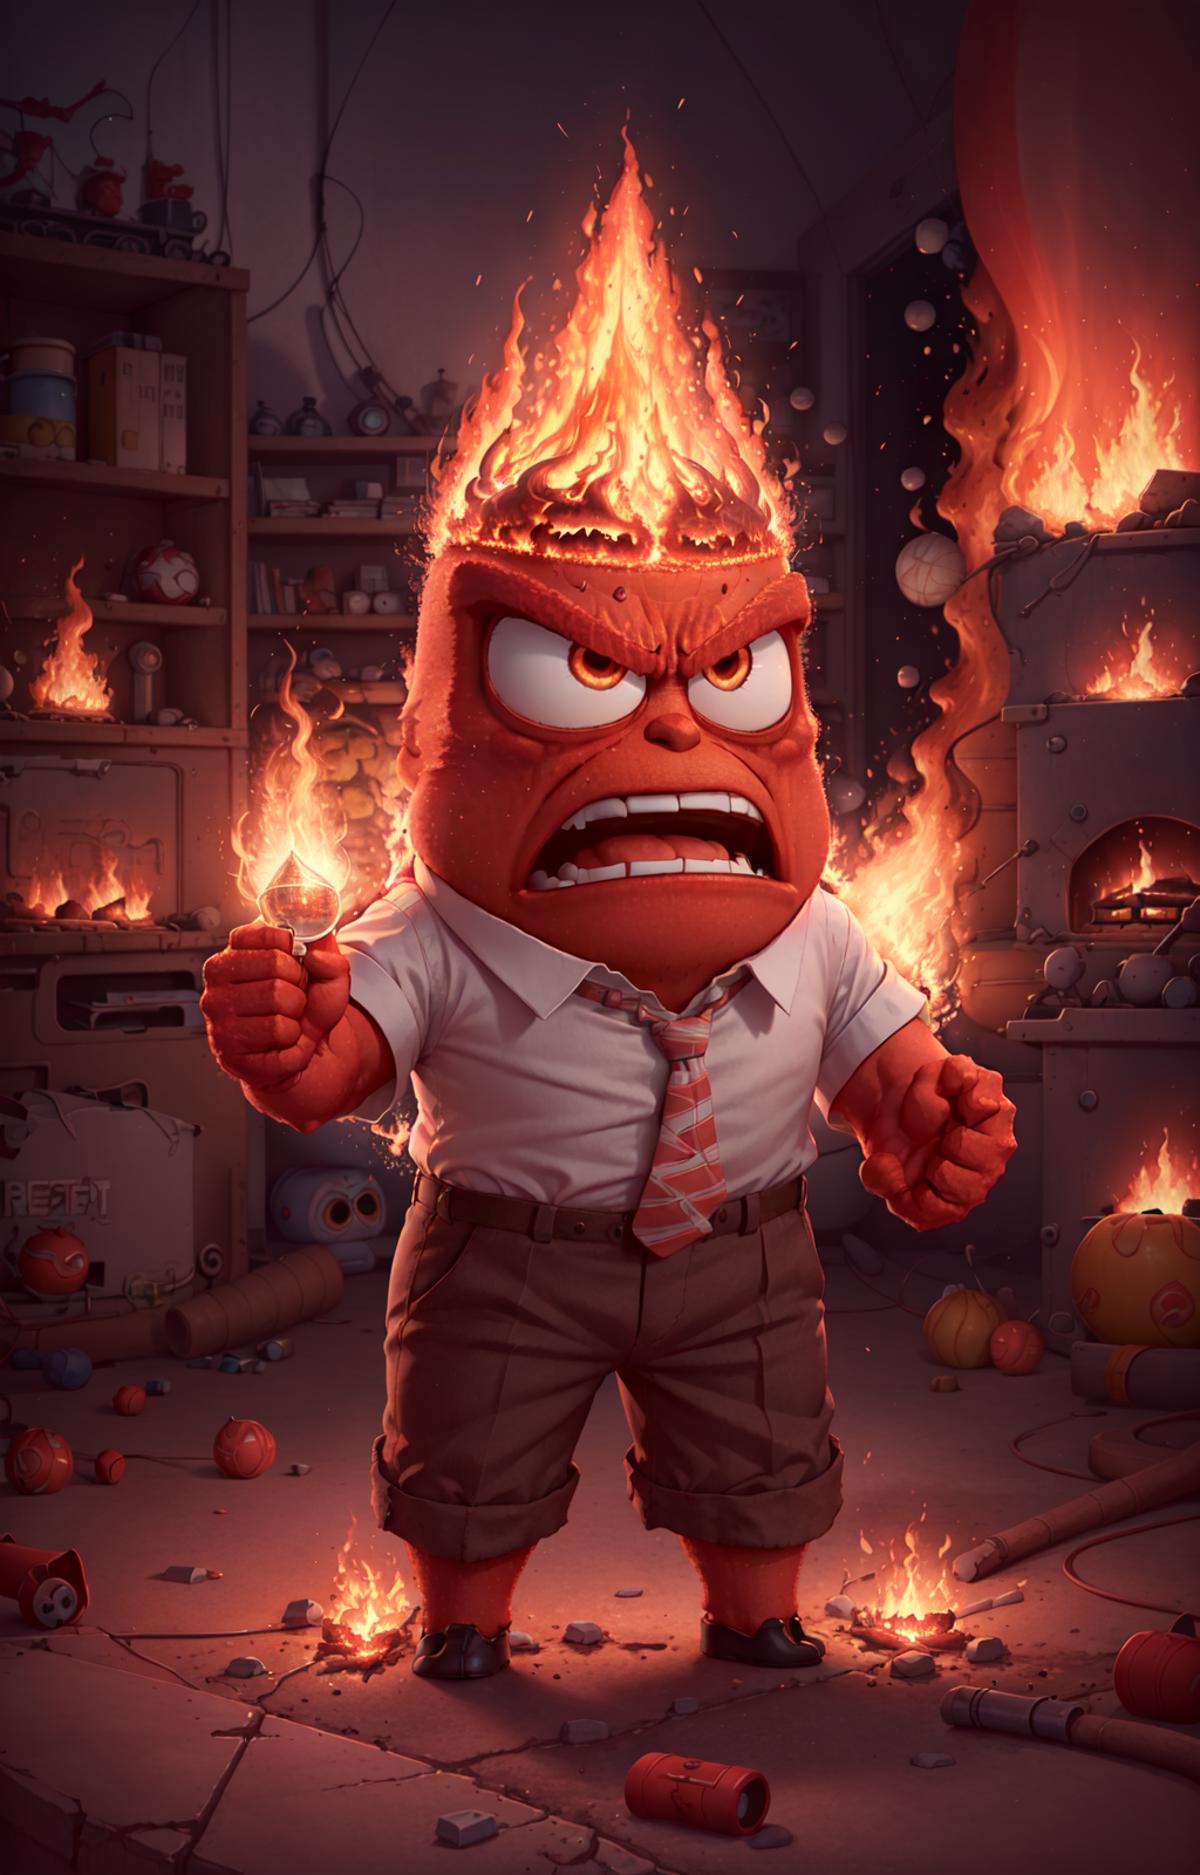 Anger - Inside-Out image by NostalgiaForever